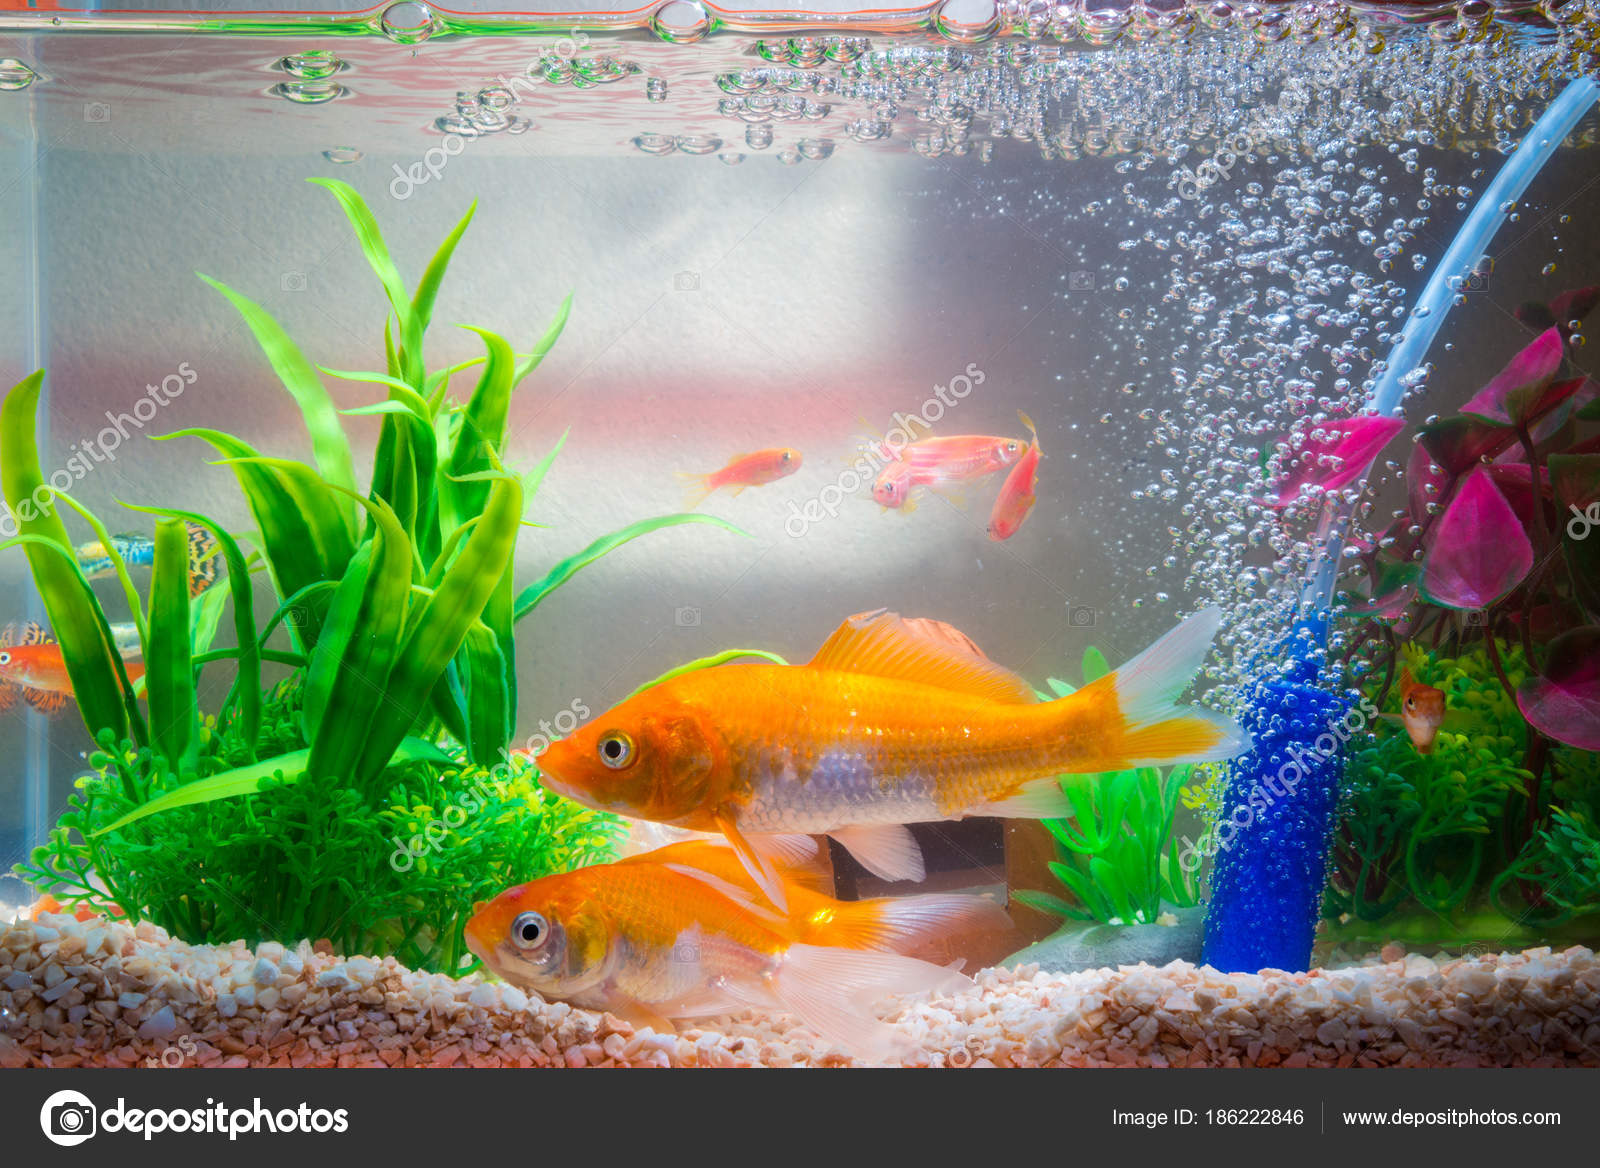 https://st3.depositphotos.com/4074693/18622/i/1600/depositphotos_186222846-stock-photo-little-fish-in-fish-tank.jpg